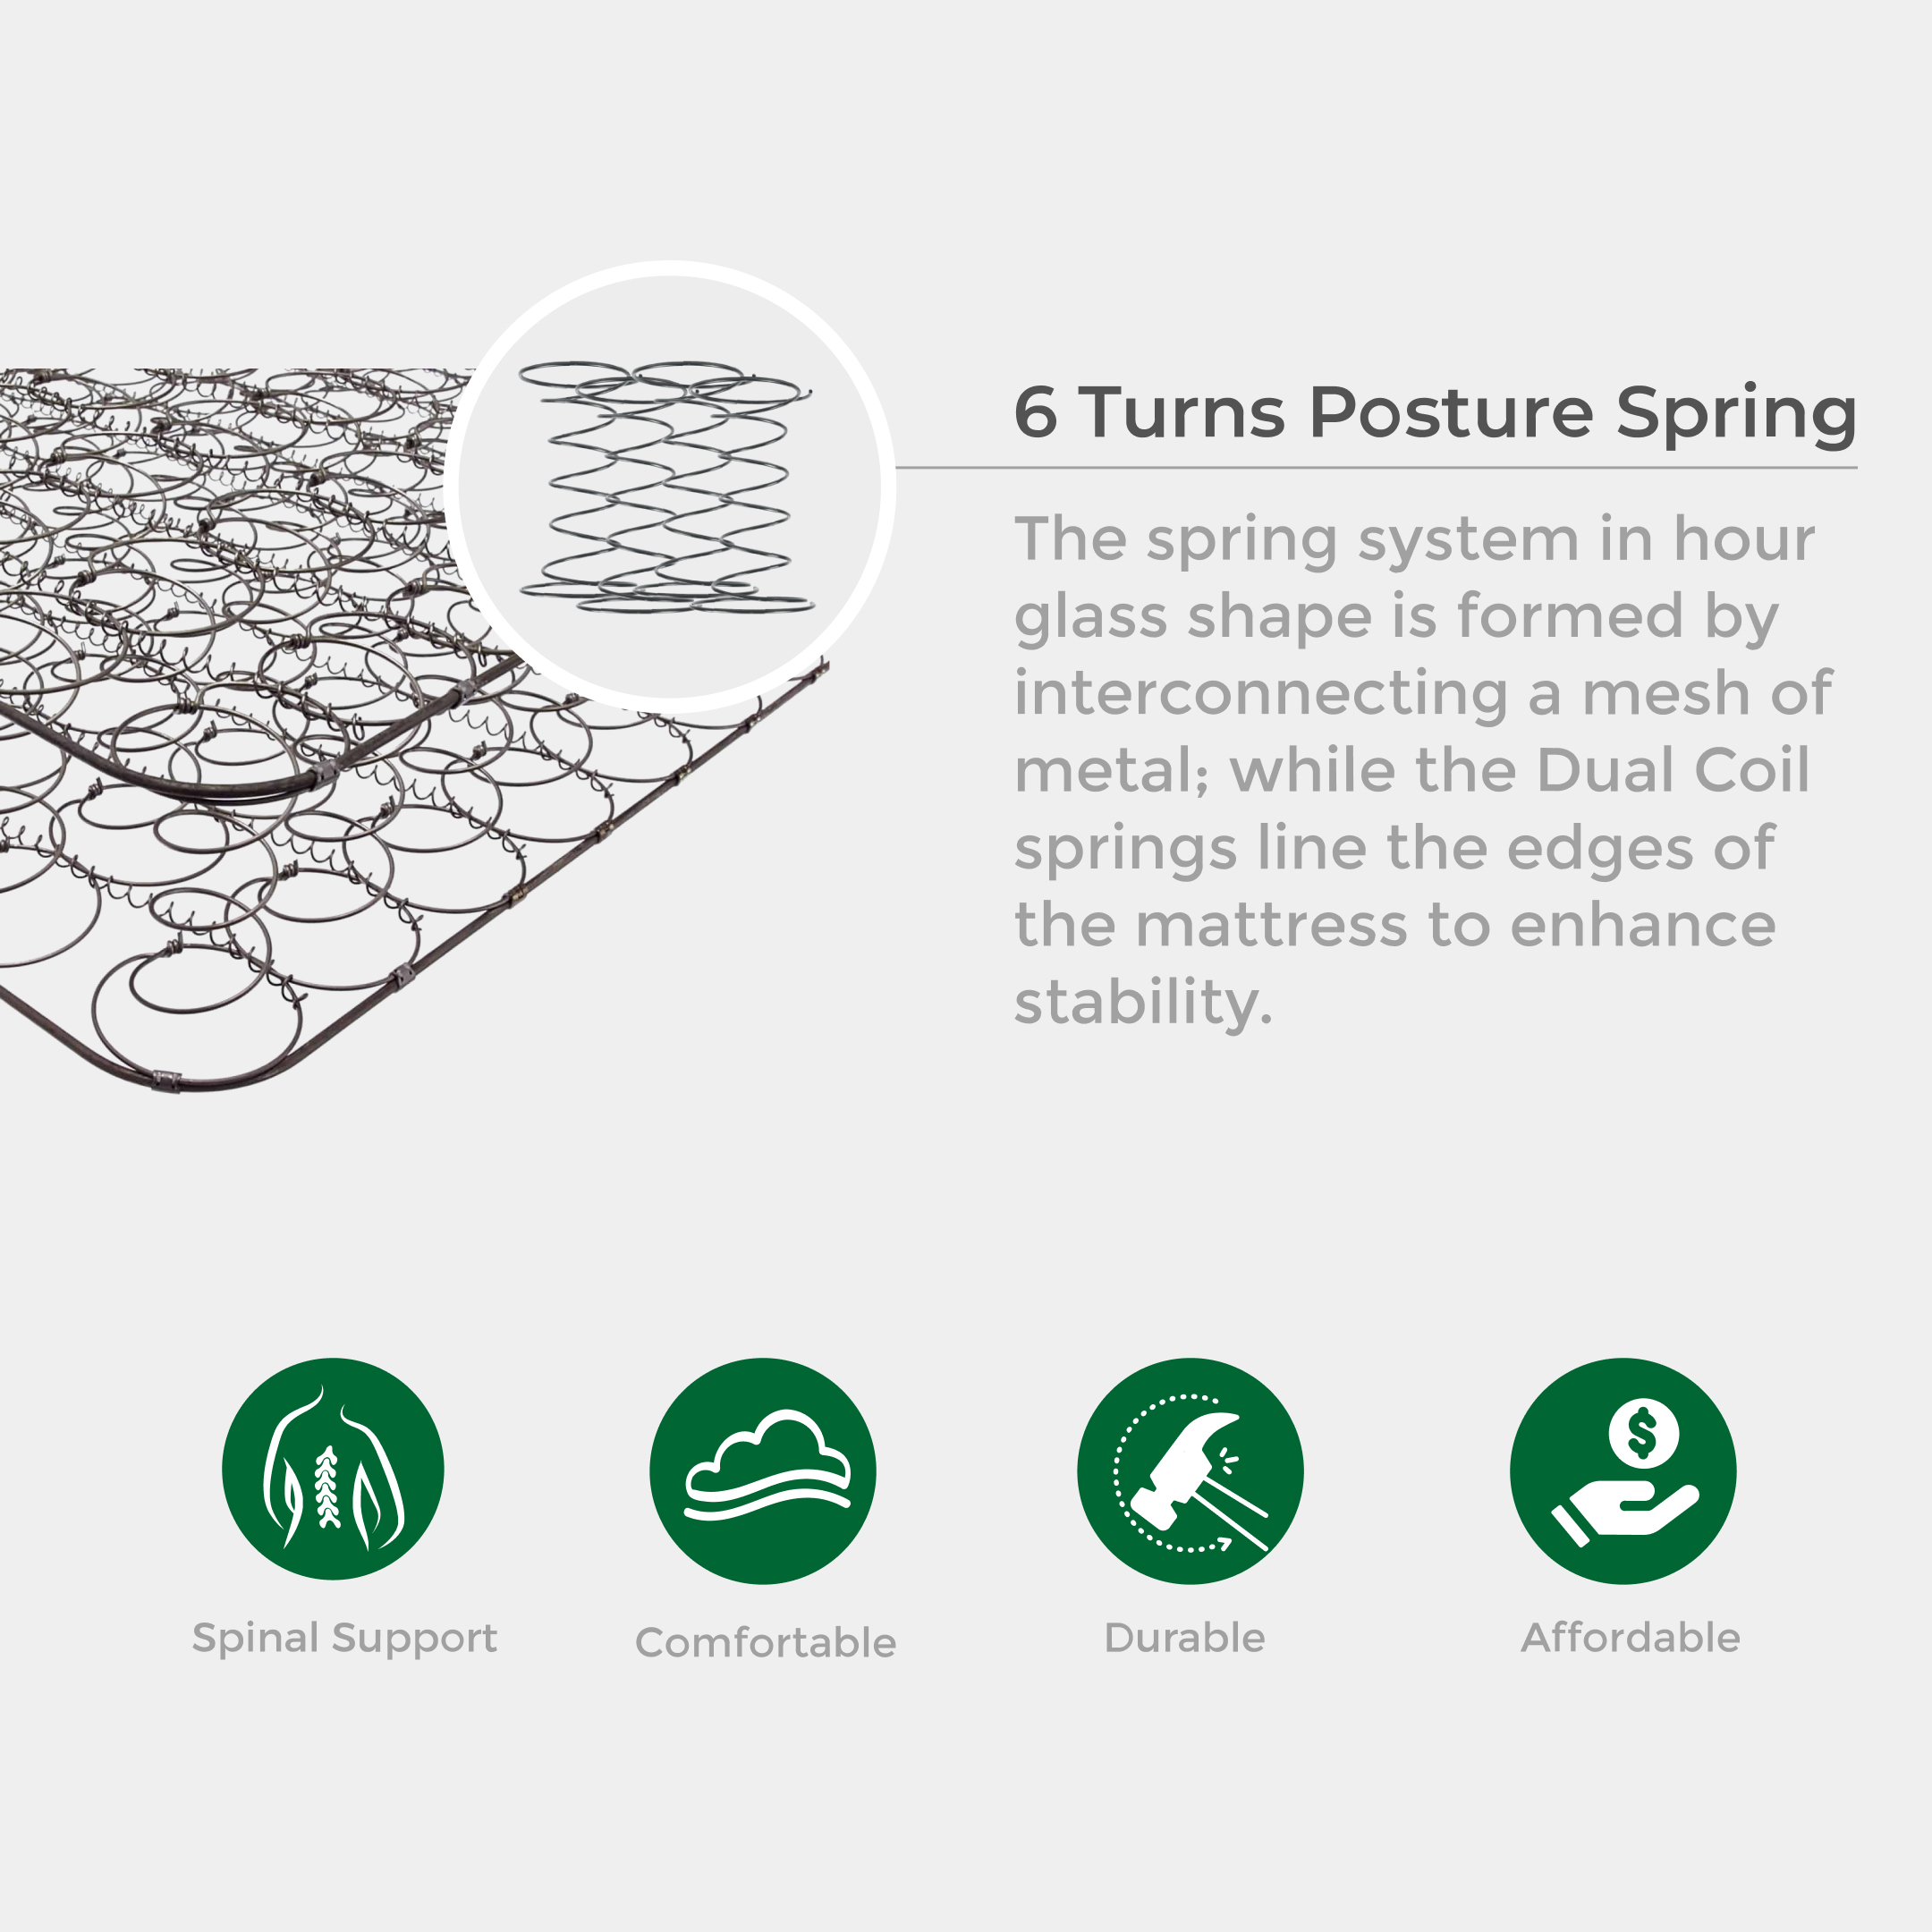 6 Turns Posture Spring